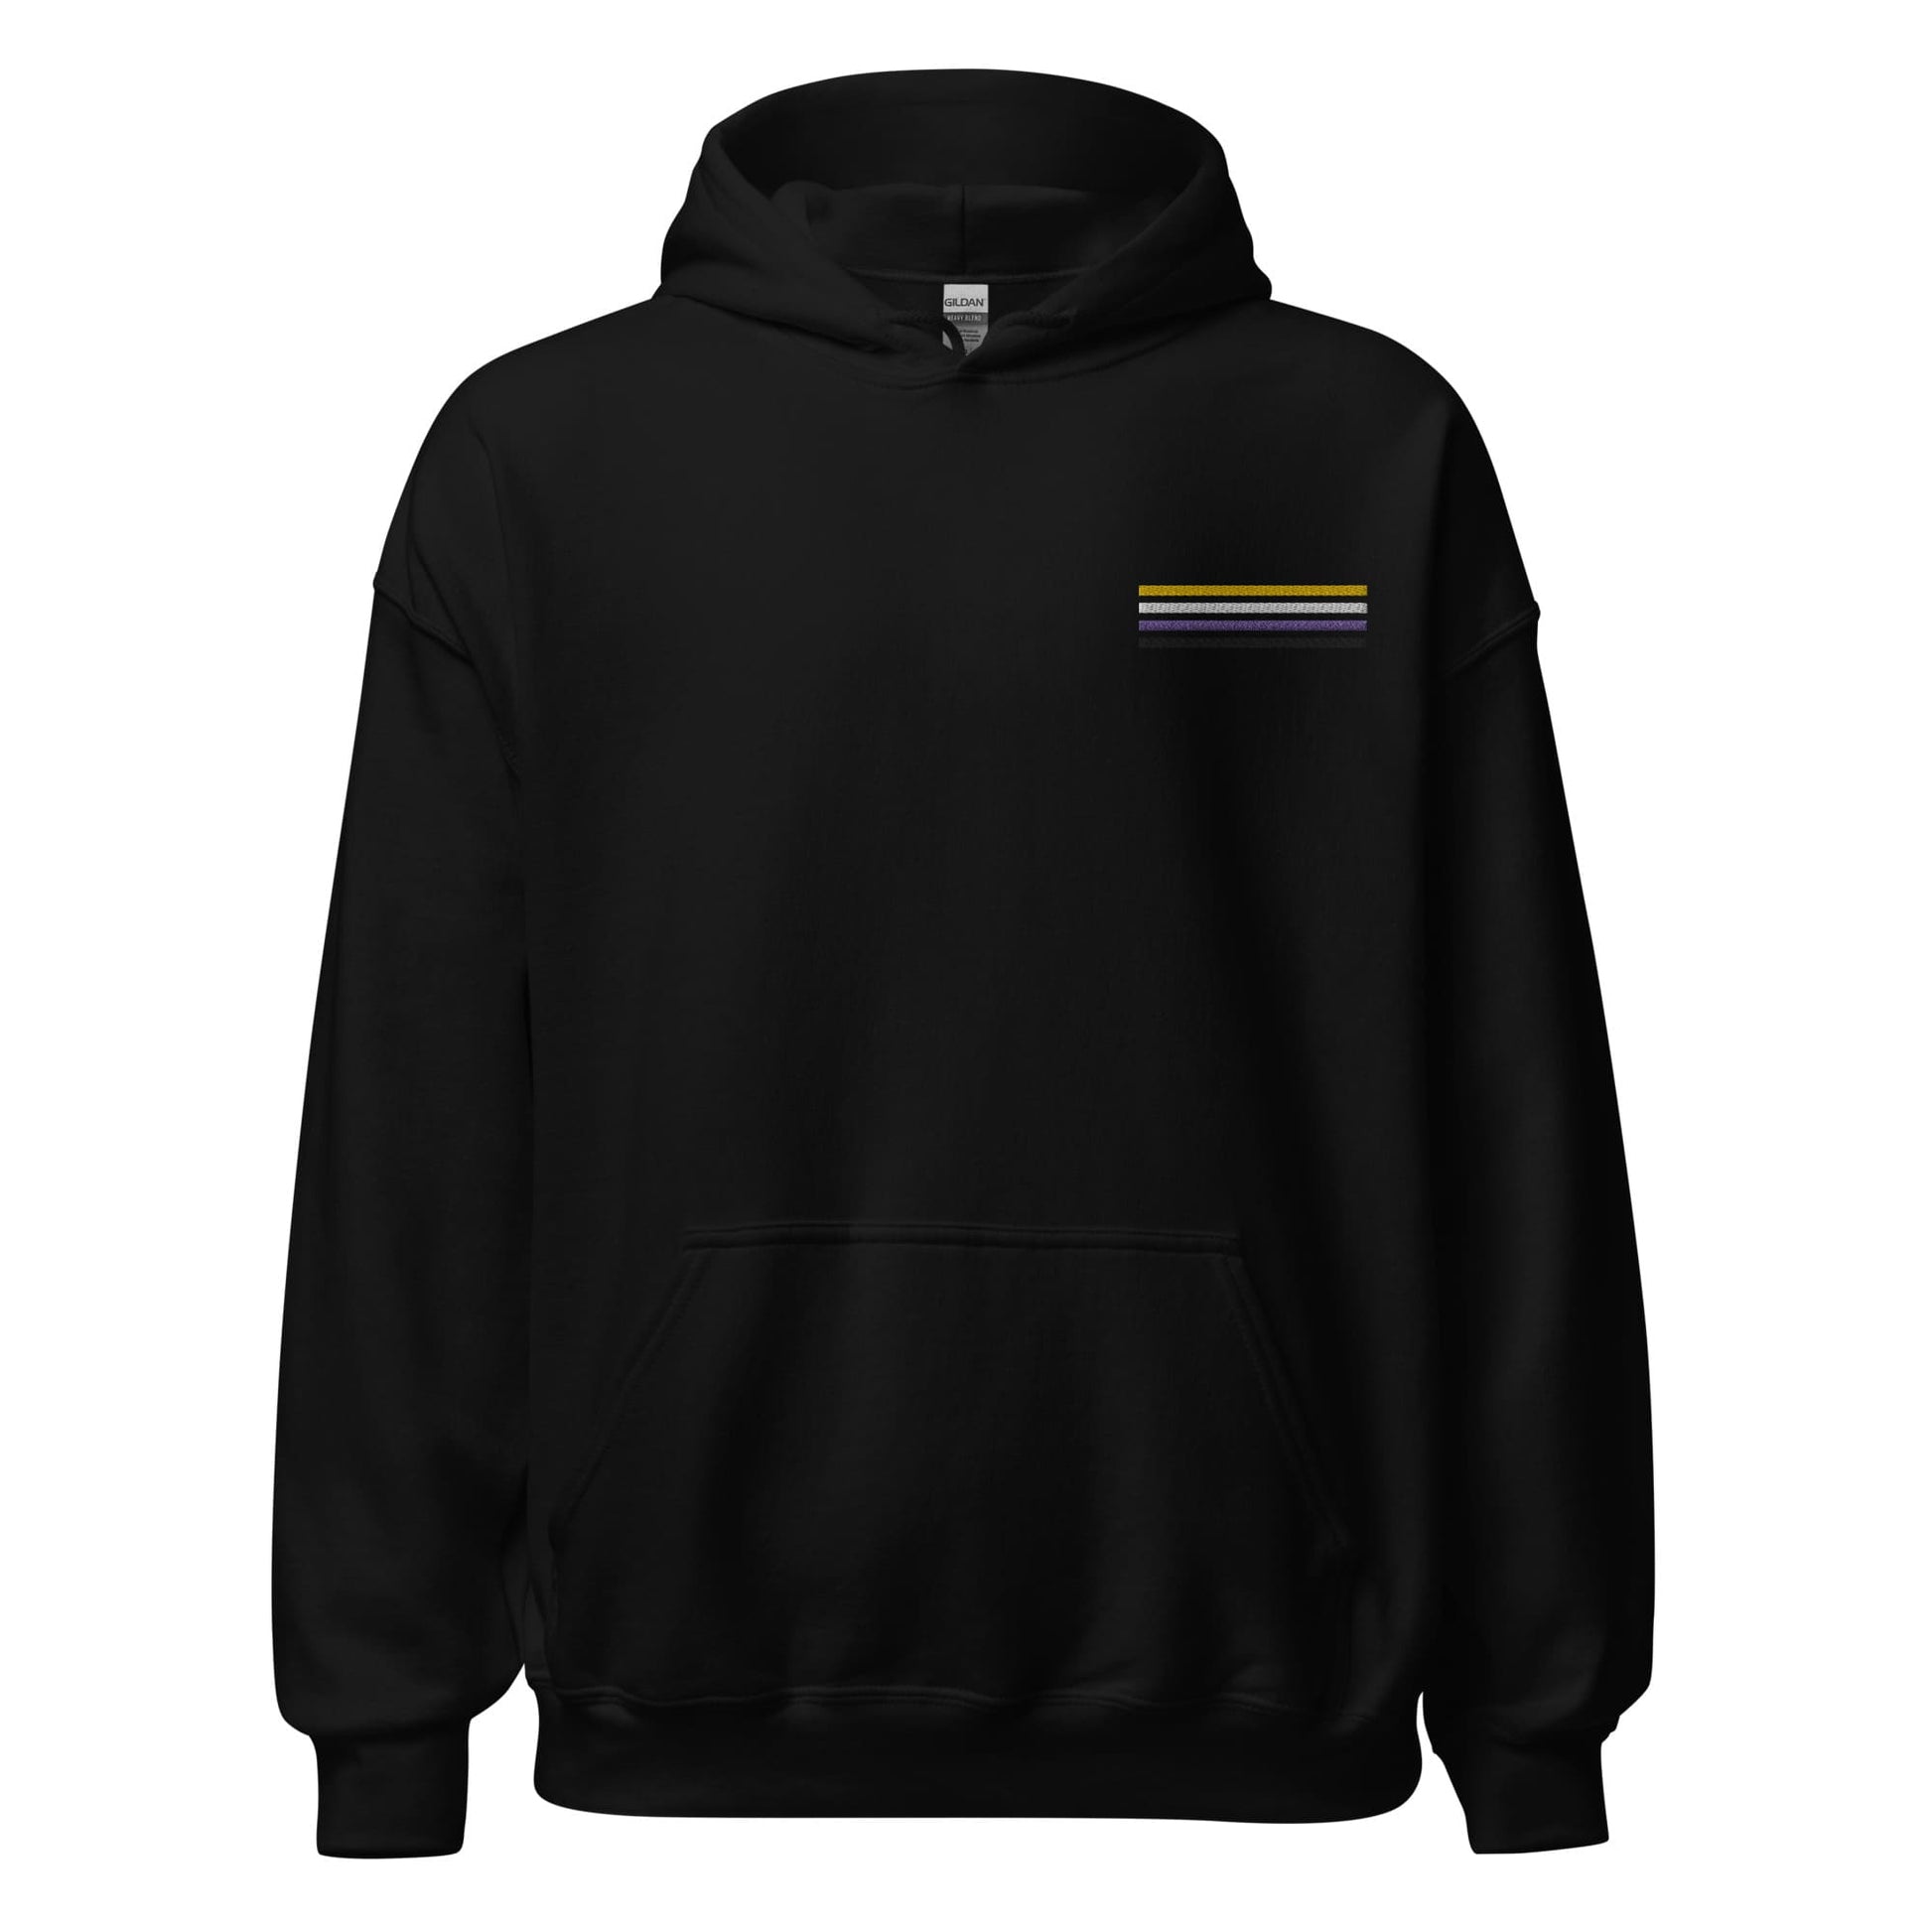 nonbinary hoodie, subtle enby pride flag embroidered pocket design hooded sweatshirt, hang